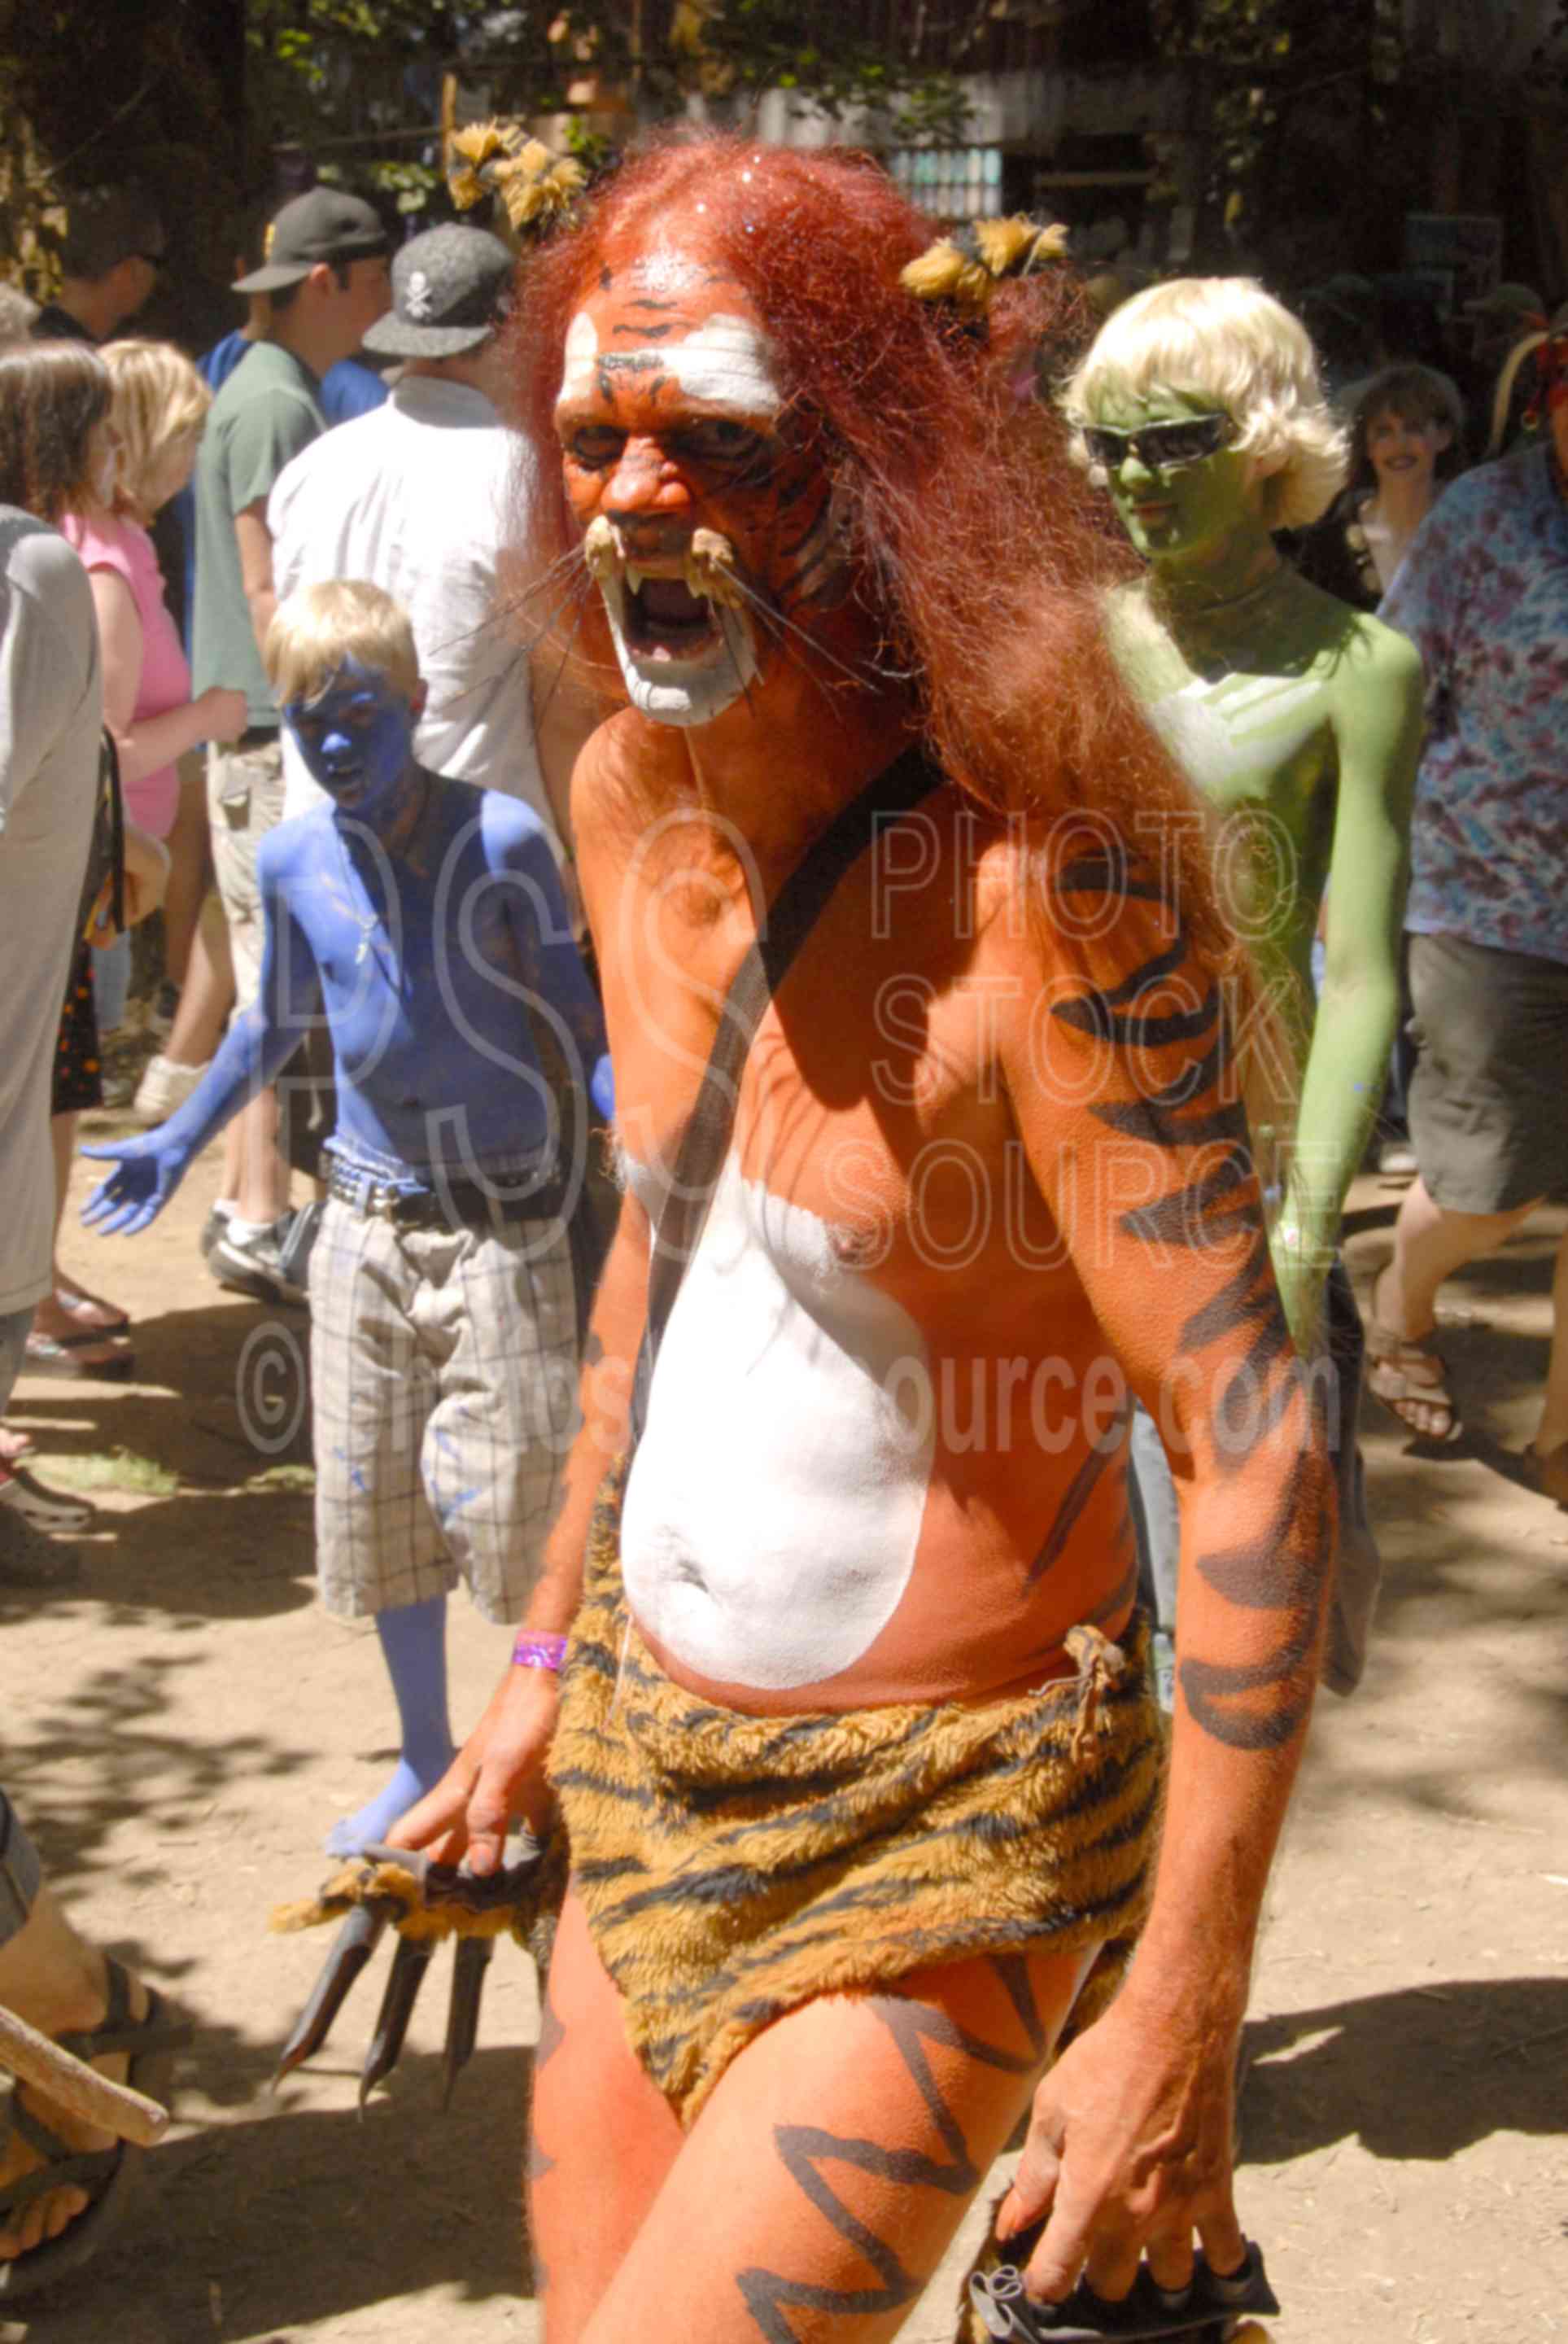 Tiger Man,entertainment,costume,people,fair,tiger